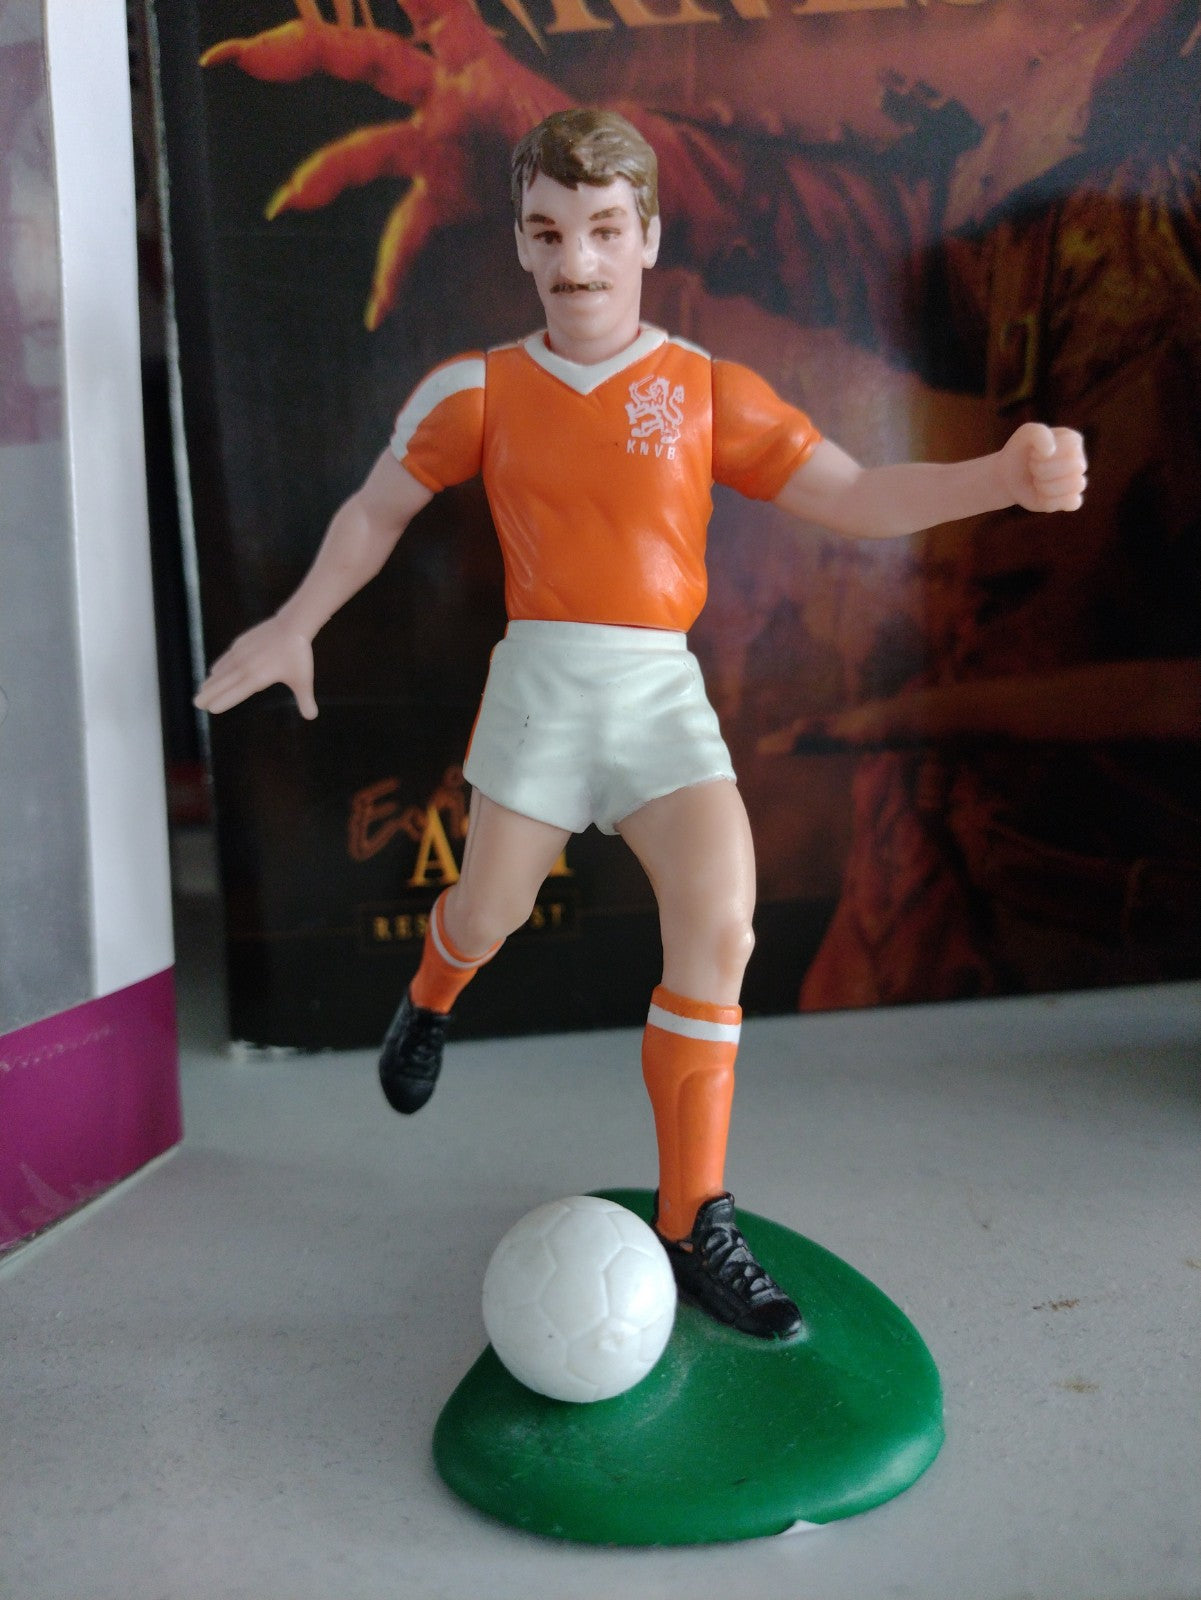 1989 SportStars Jan Wouters Holland Football Figure